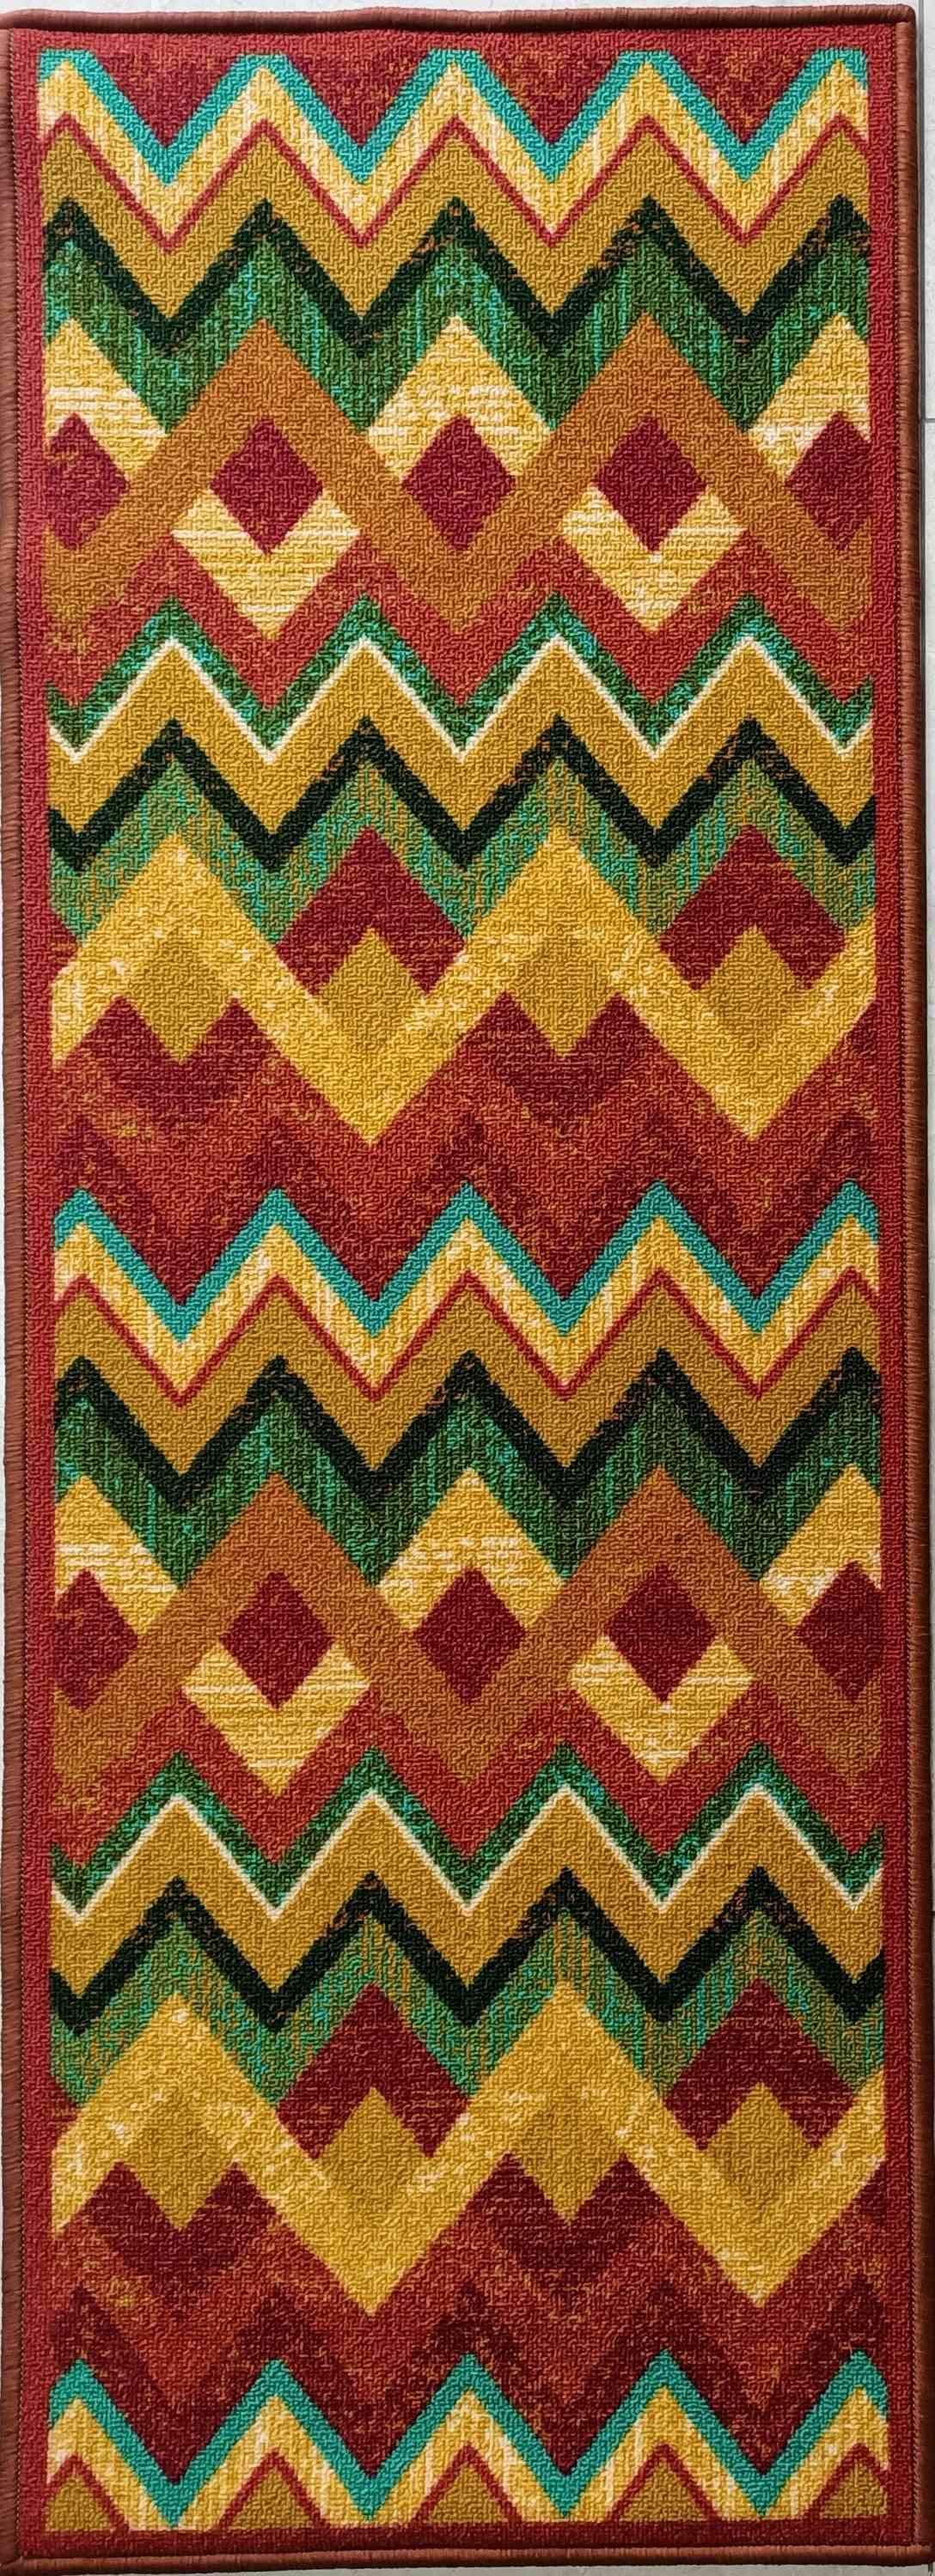 Protuklizni mali tepih - prostirka od poliestera u vintage stilu